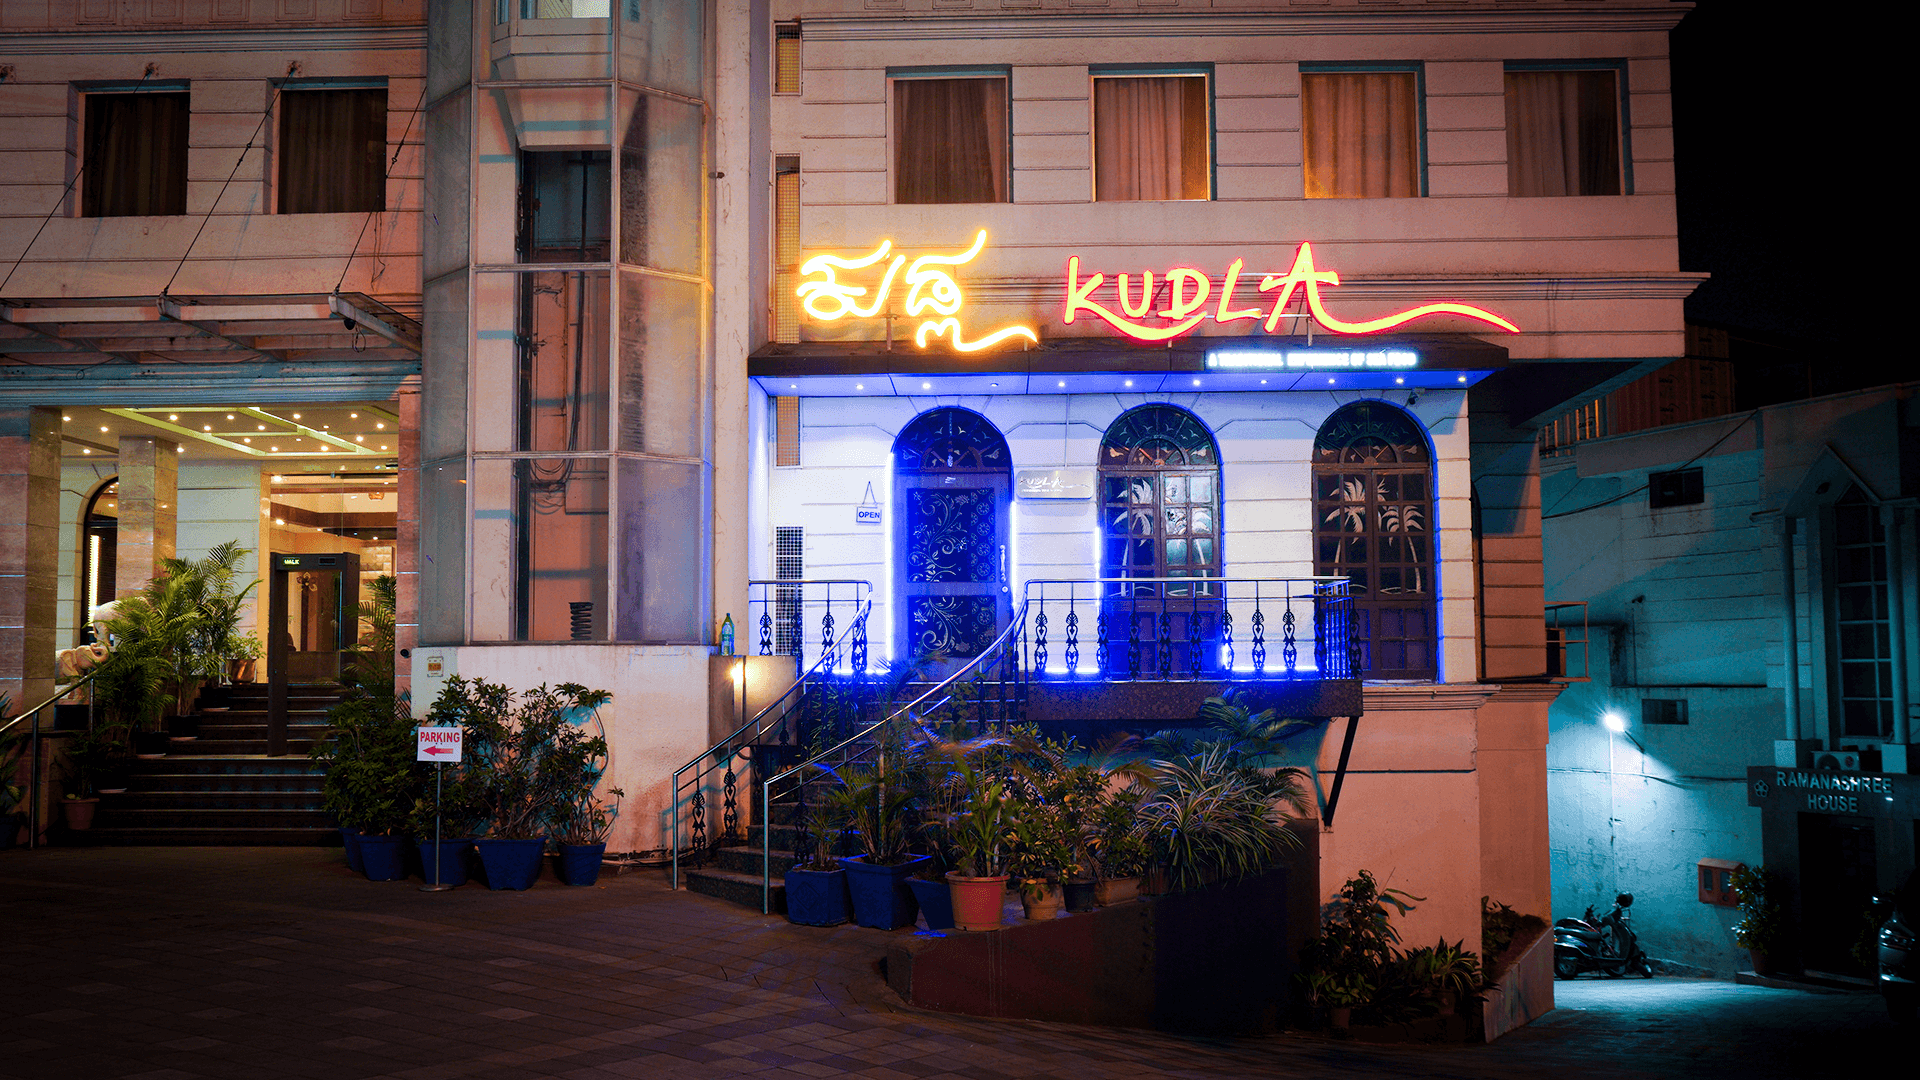 About Kudla seafood Restaurant